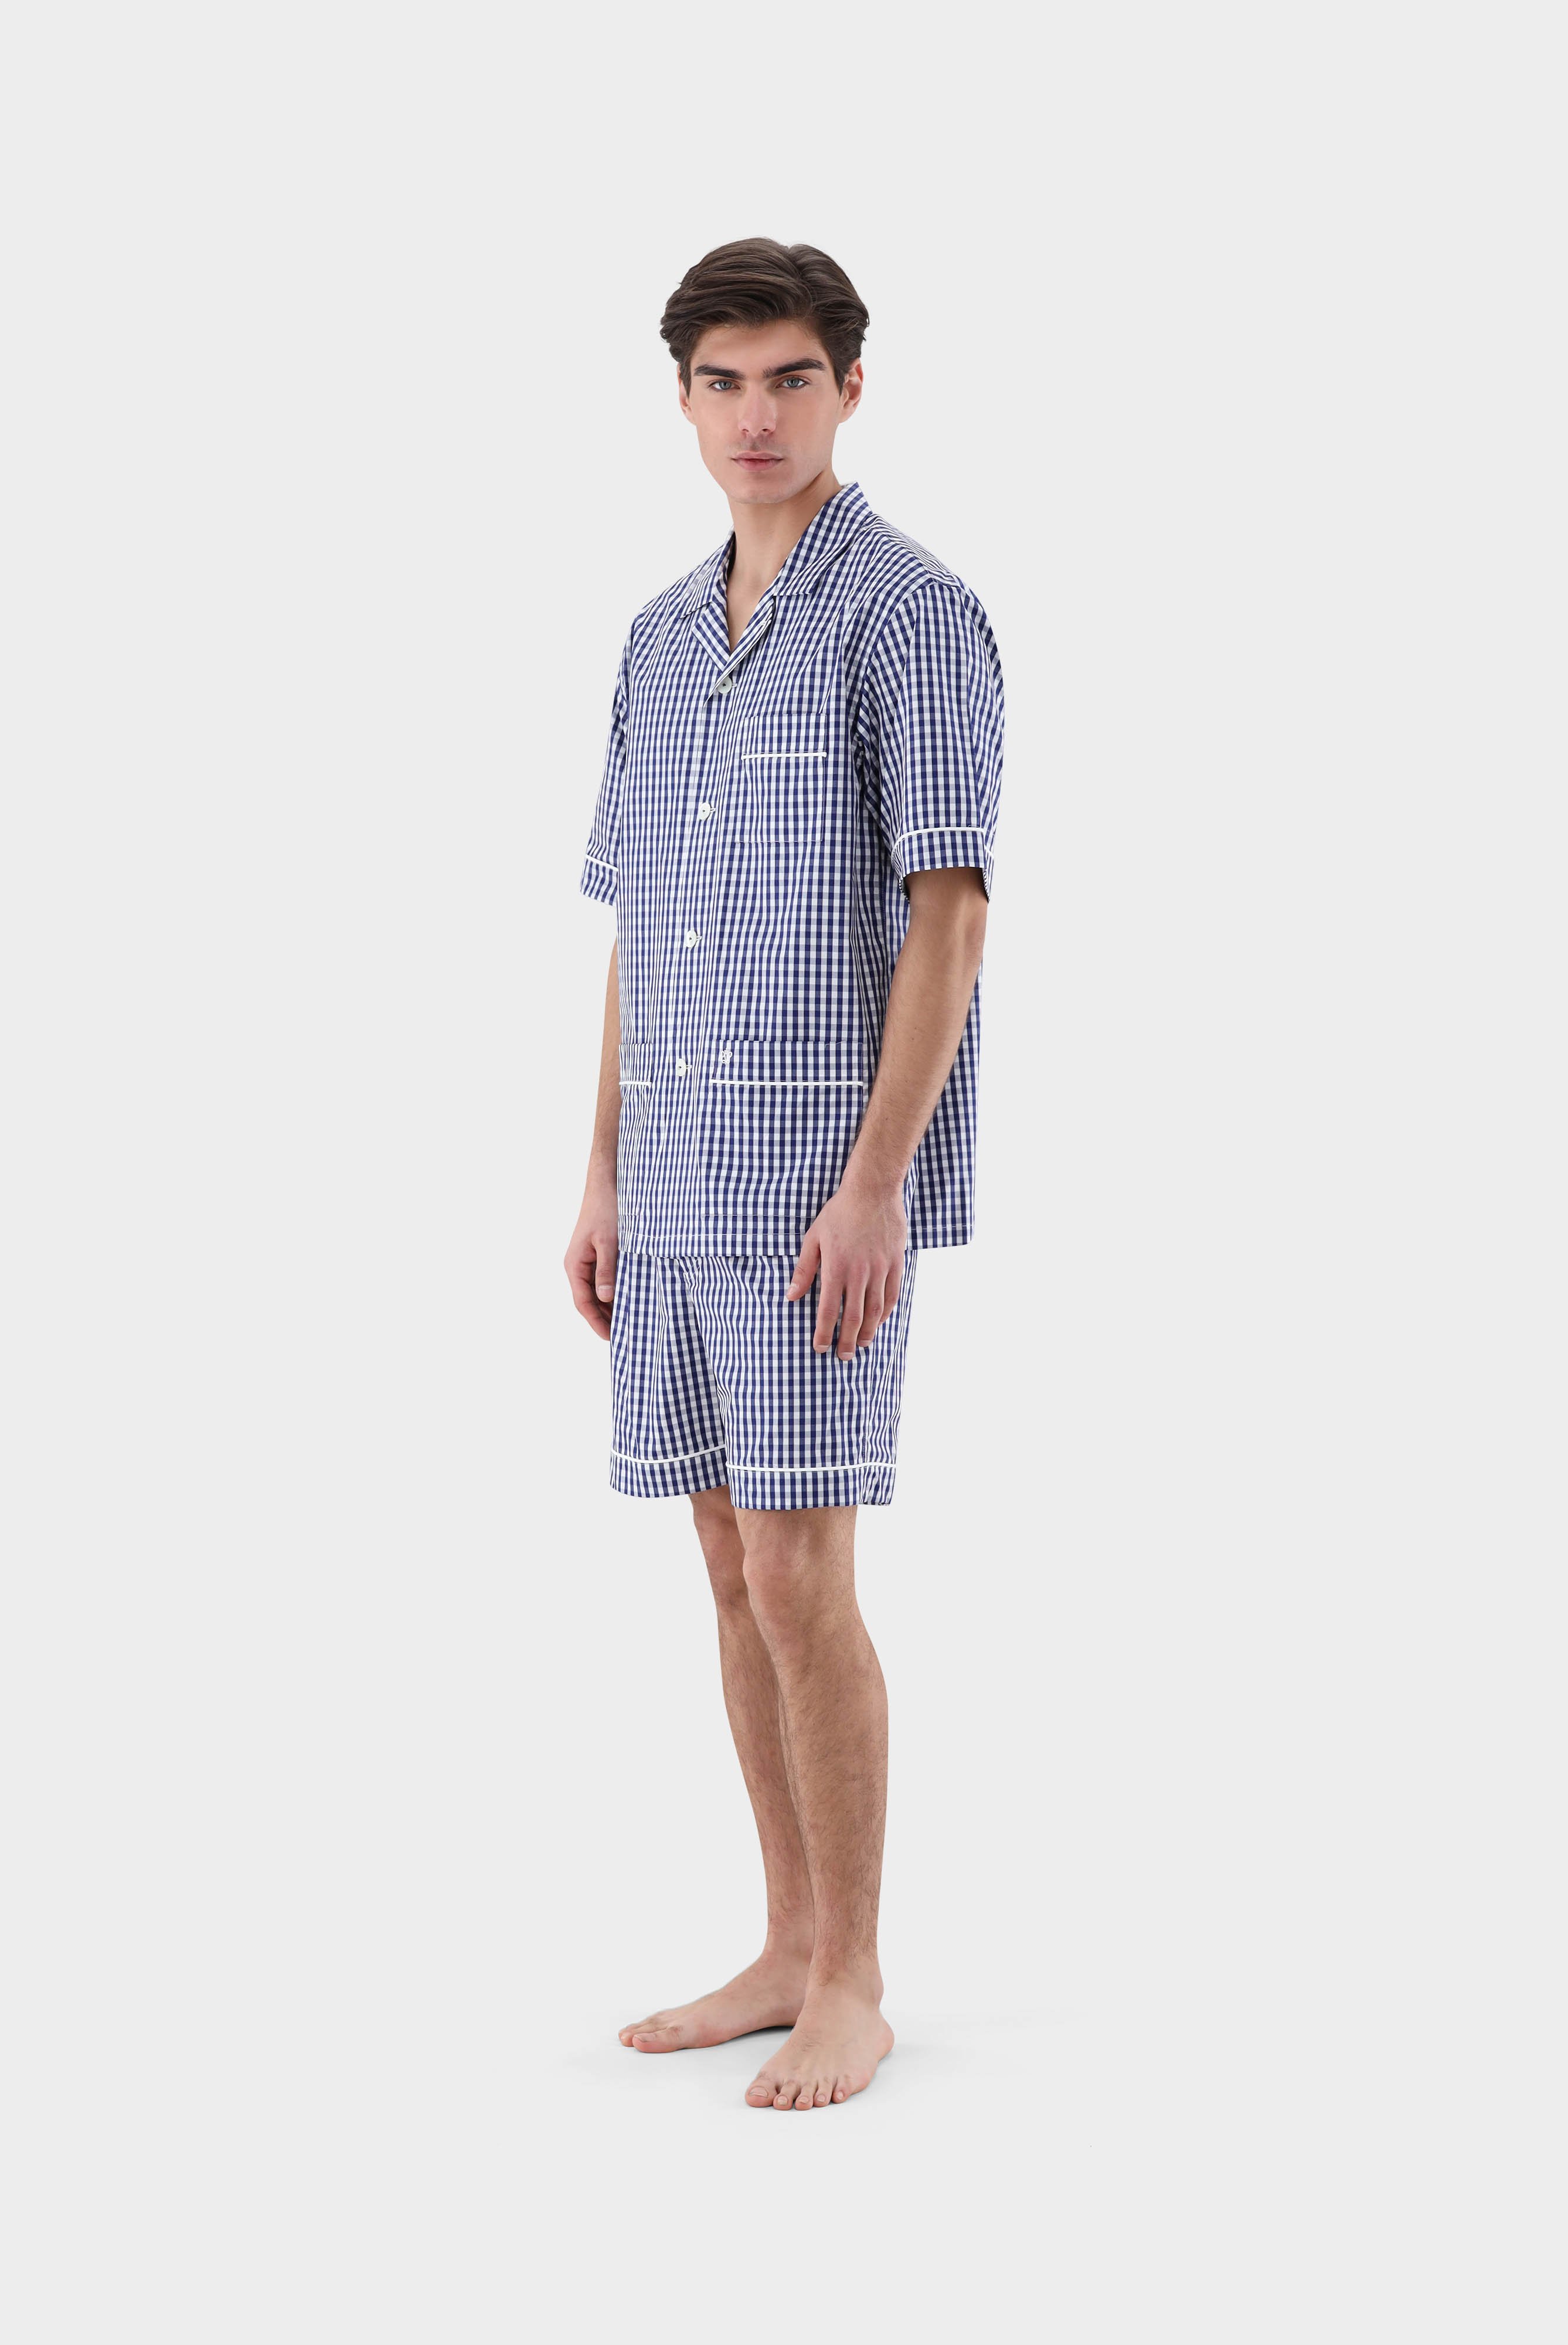 Pyjamas+Karierter Popeline Kurzpyjama mit Paspeldetails+91.1150.UL.156397.780.48